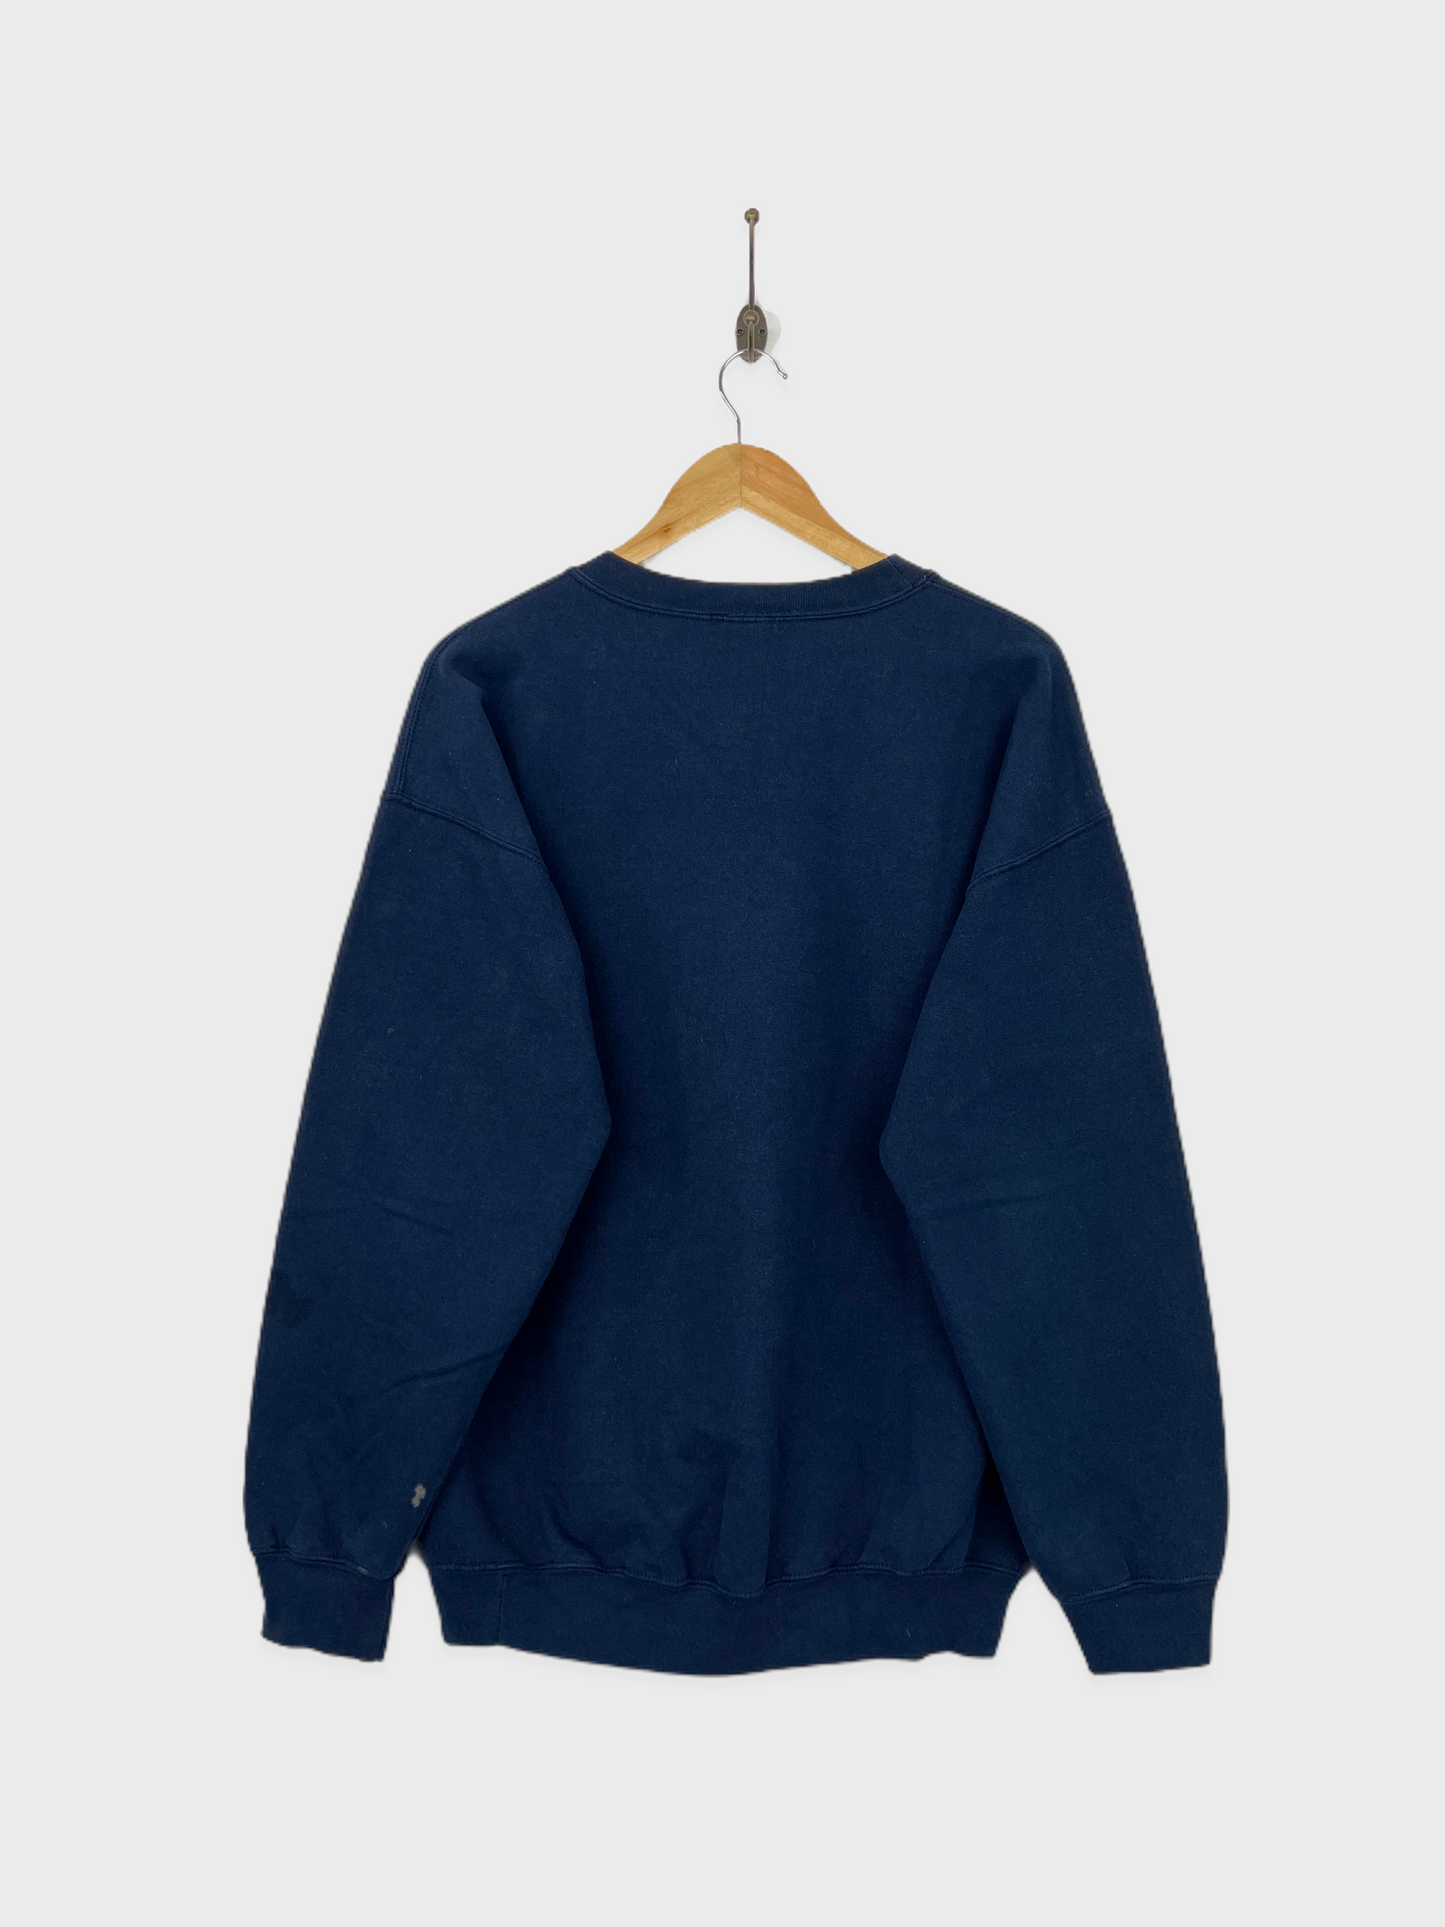 90's Ireland Made Embroidered Vintage Sweatshirt Size M